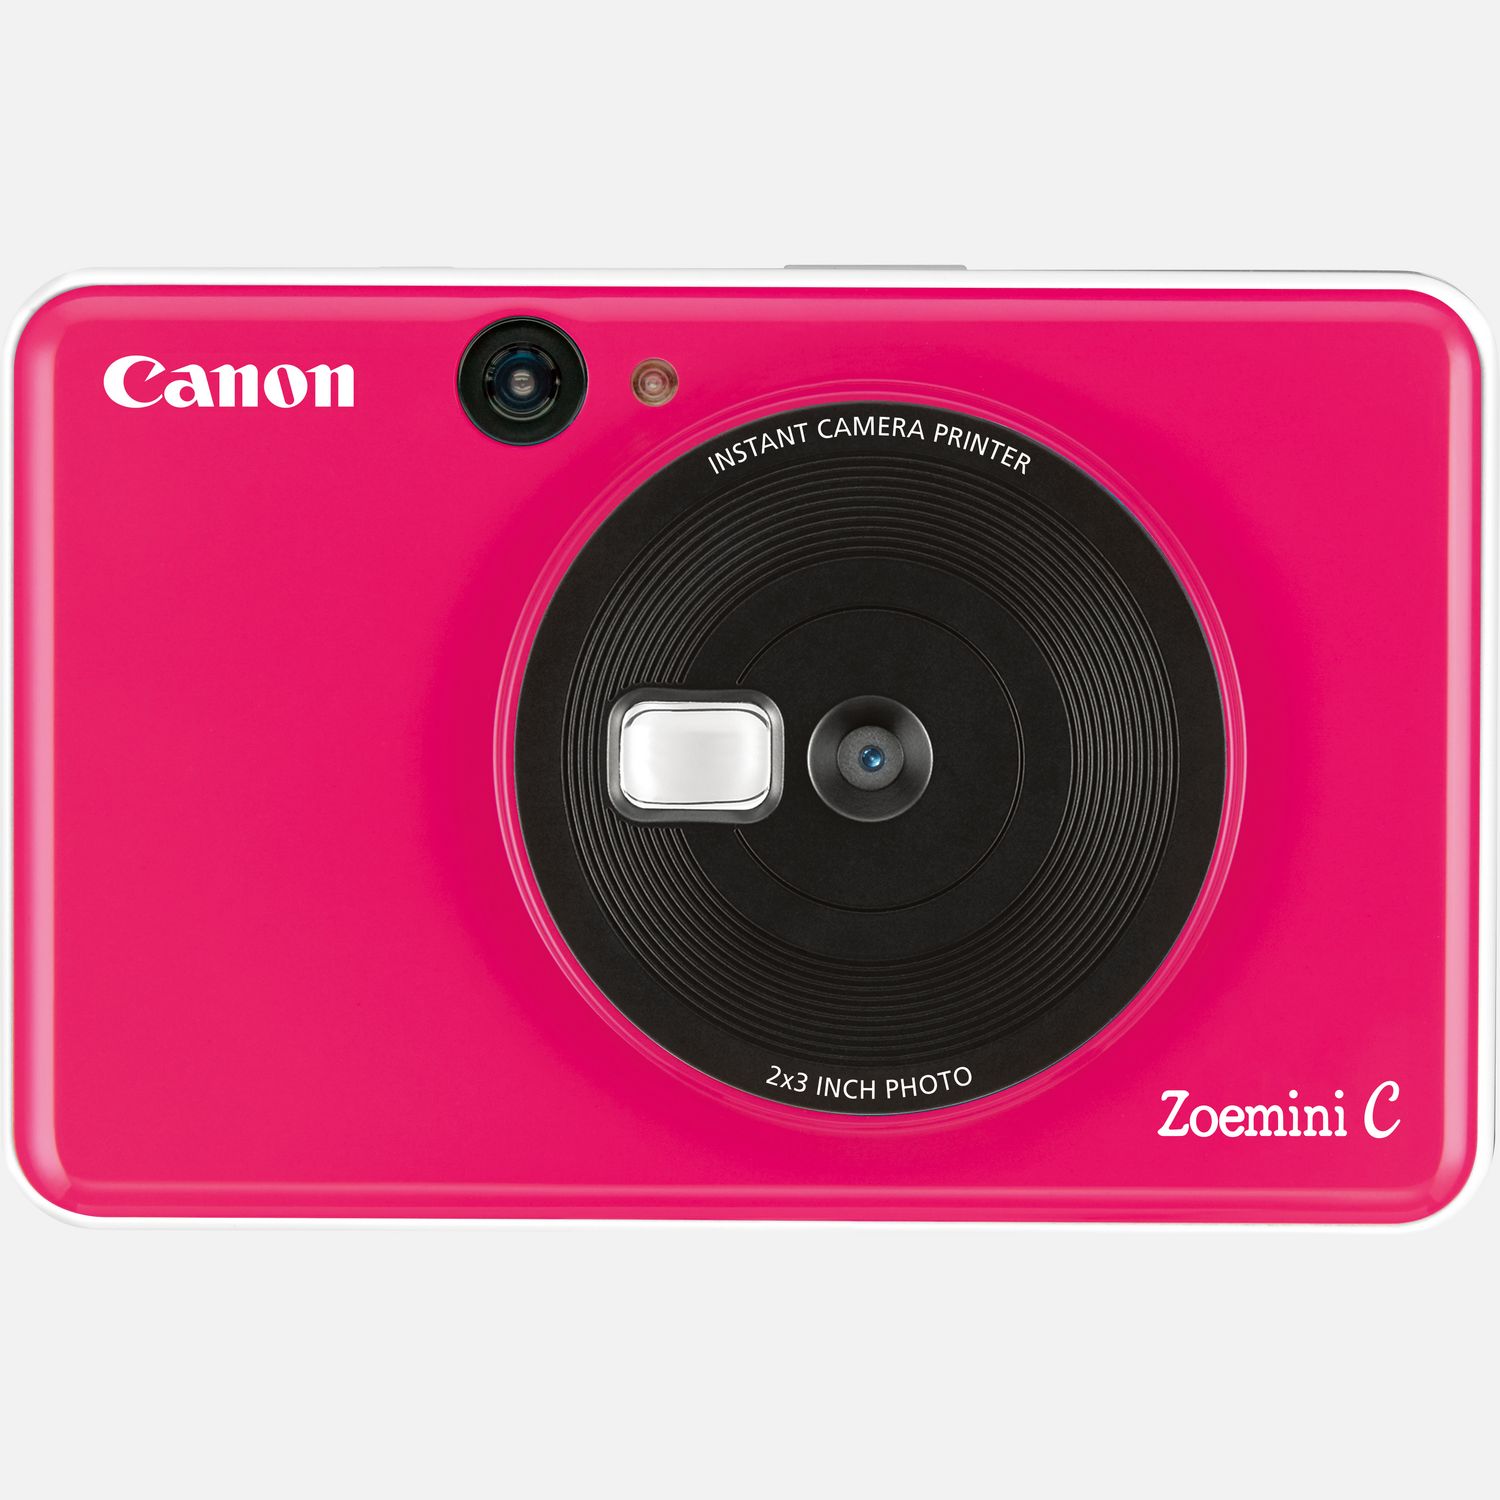 Image of Fotocamera istantanea Canon Zoemini C, Bubblegum Pink